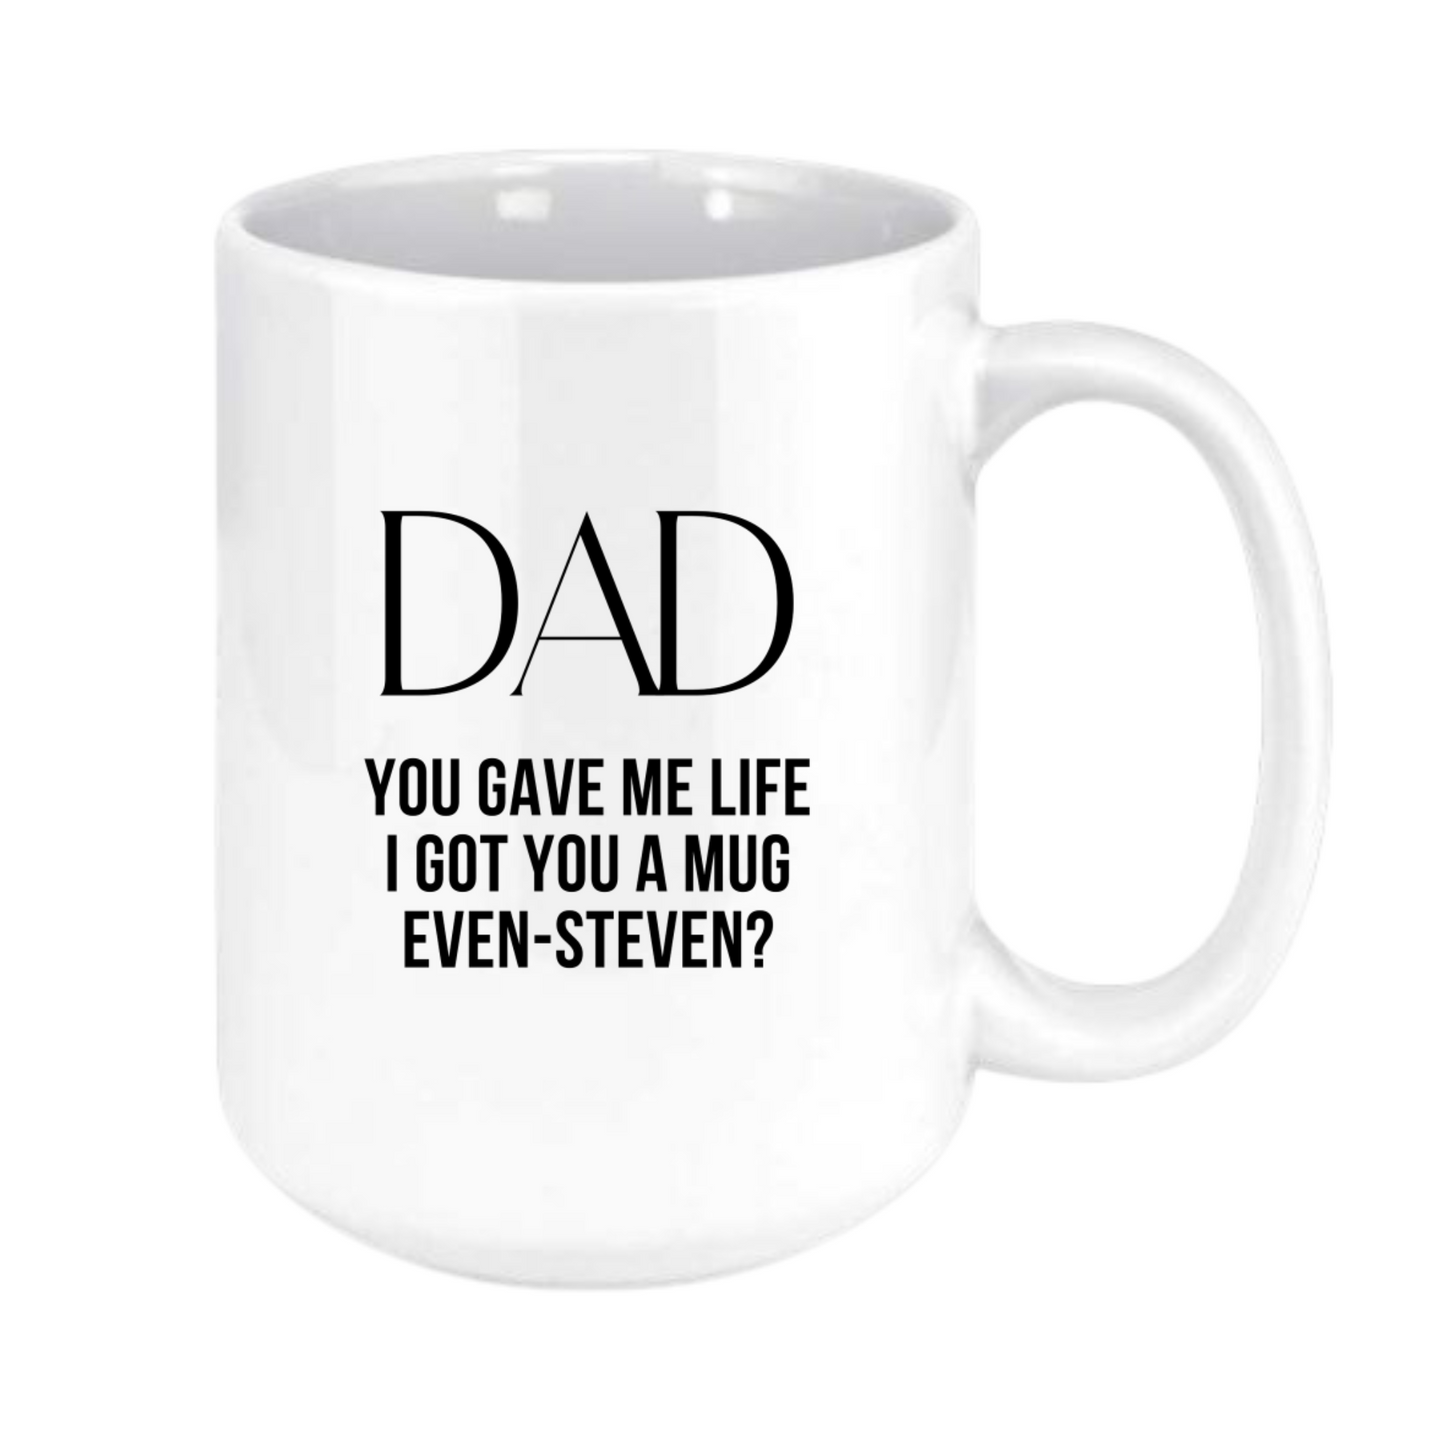 Dad you gave me life, I gave you a mug, even-steven? Mug